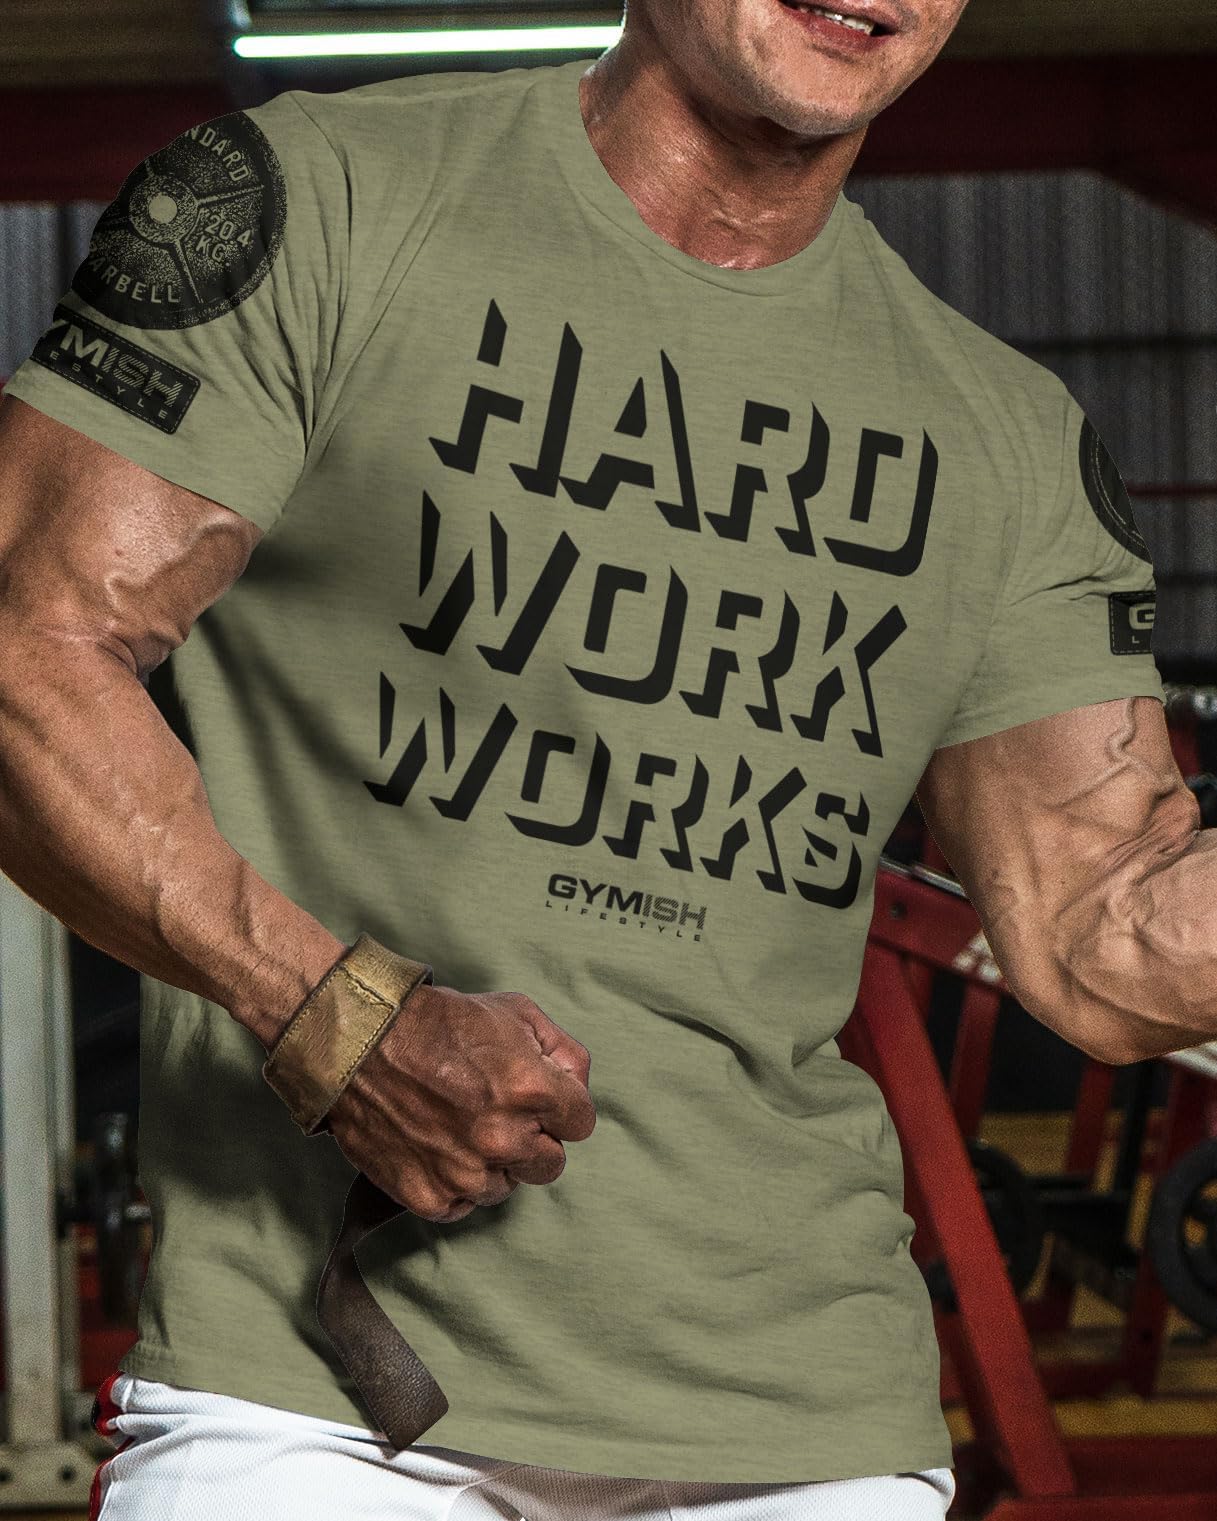 049. Hard Work Works Workout T-Shirt